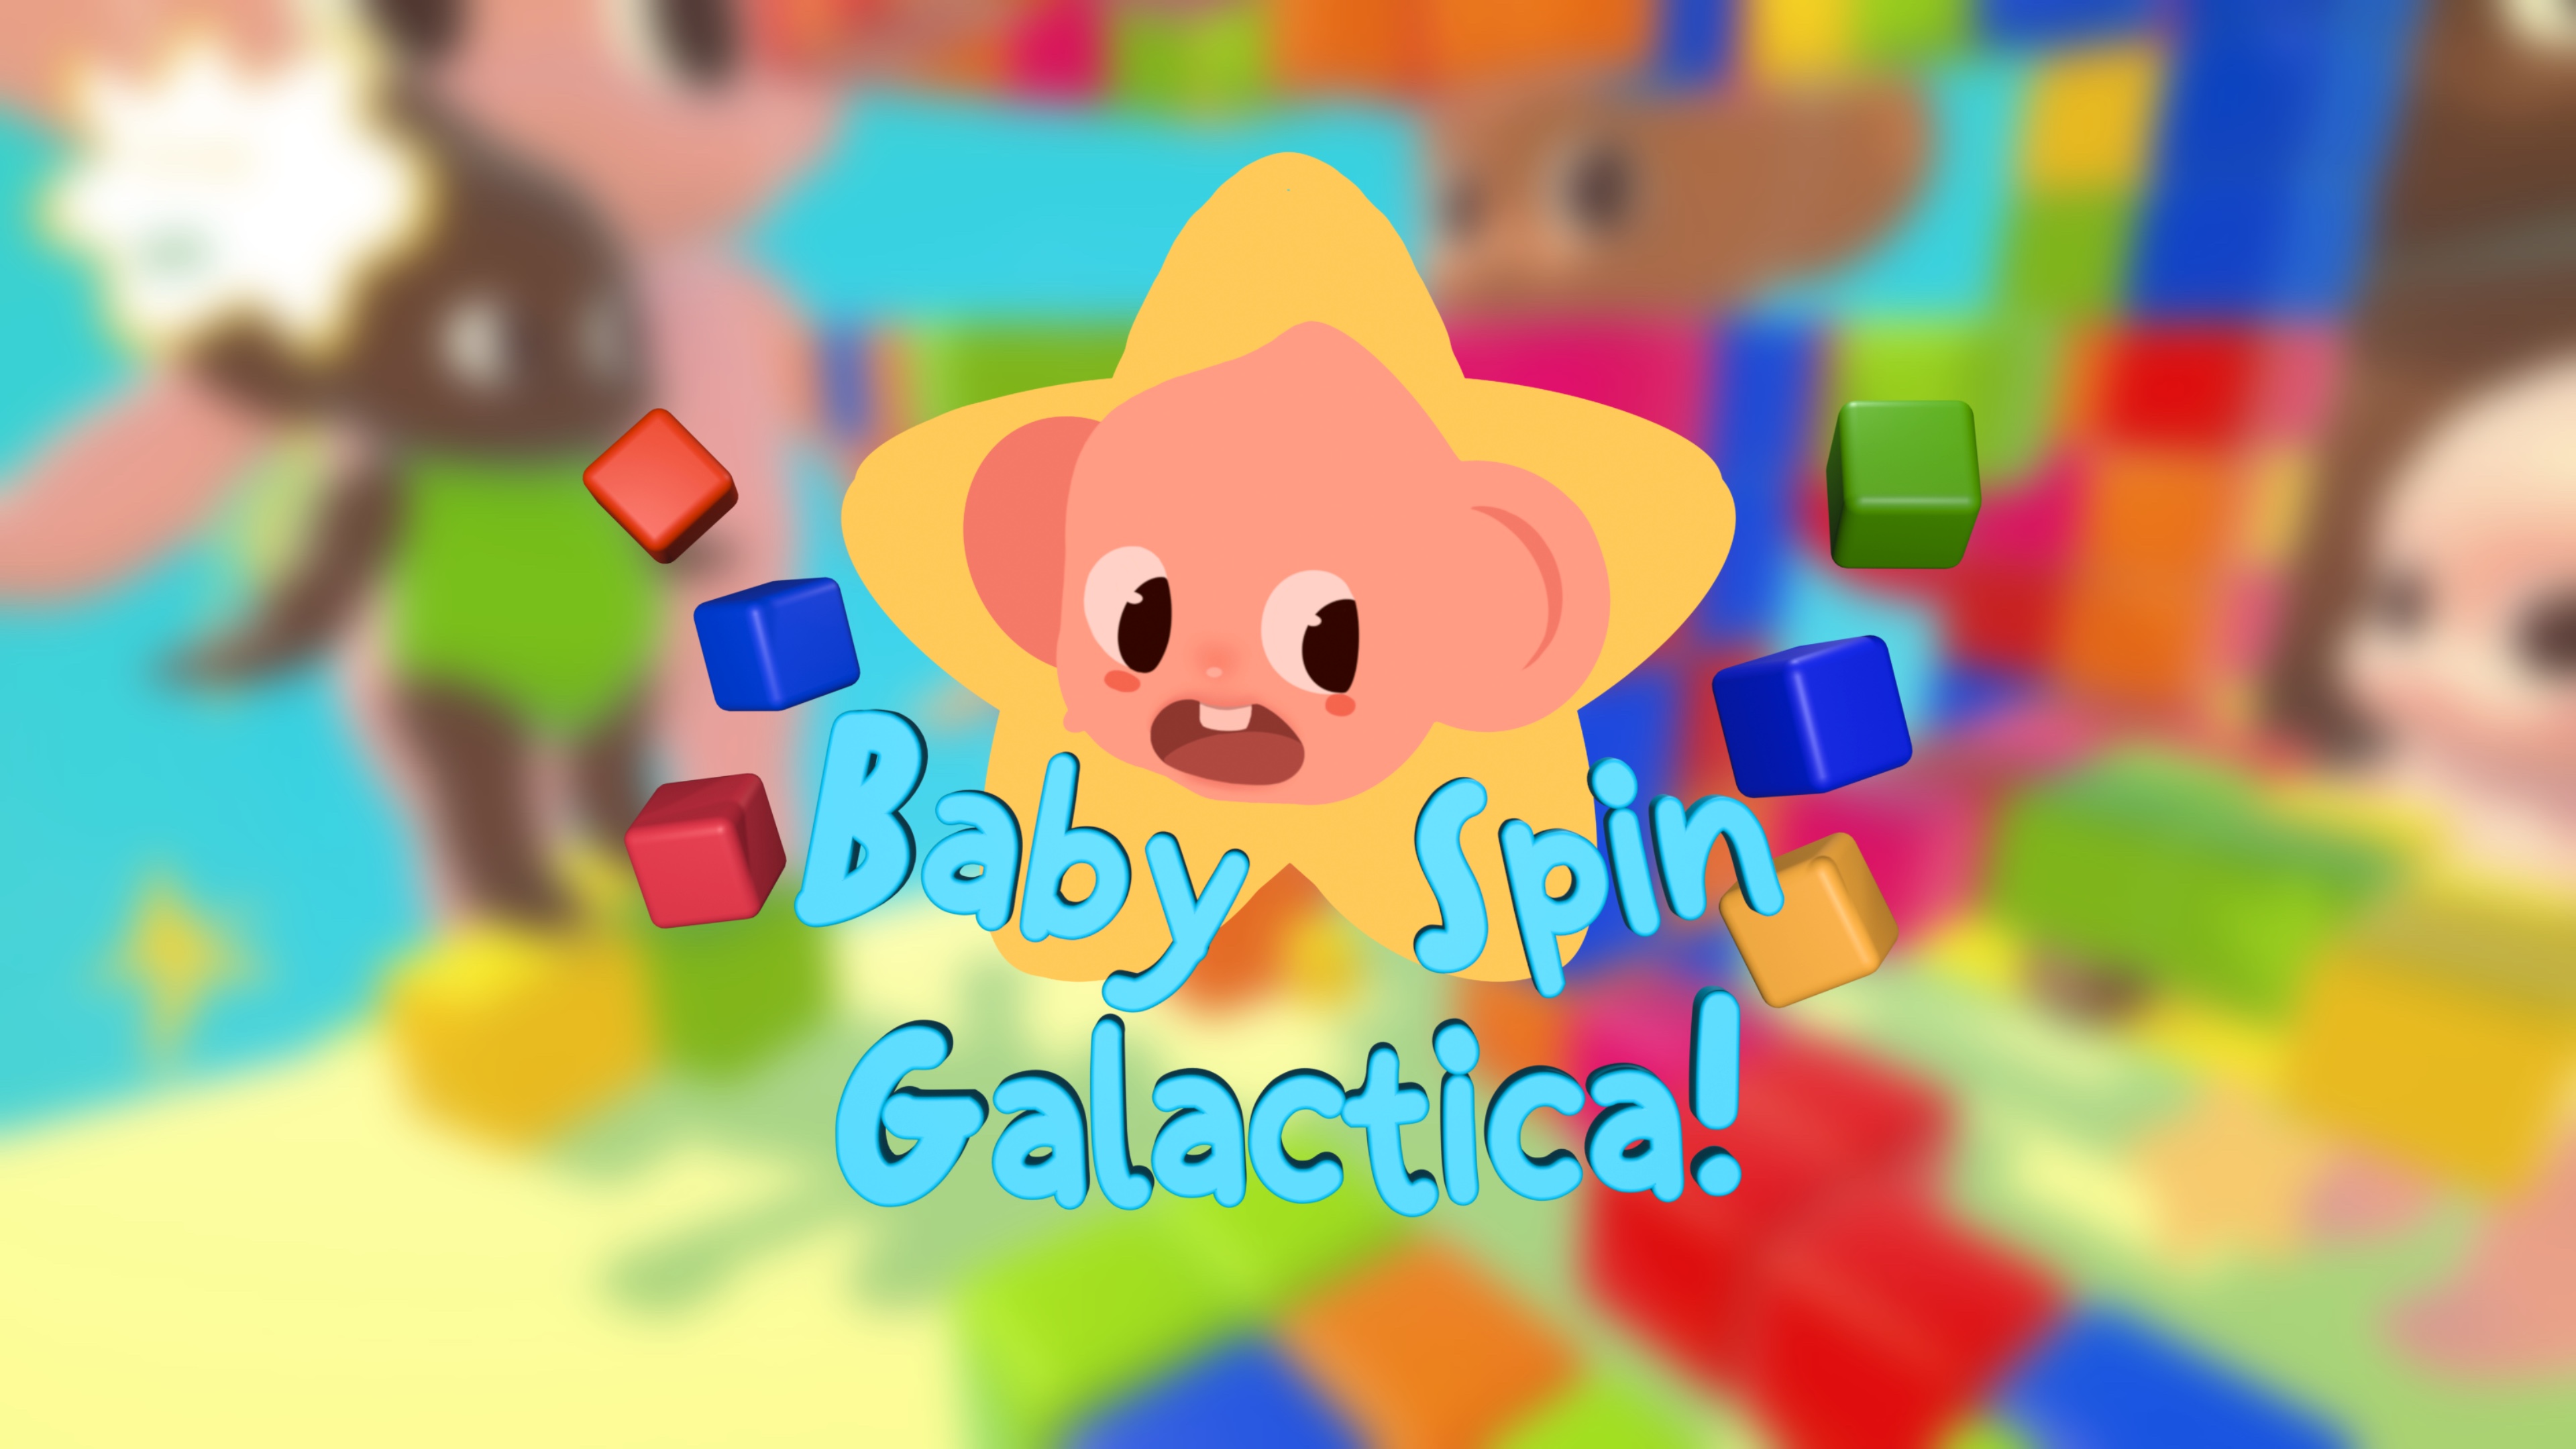 Baby Spin Galactica!